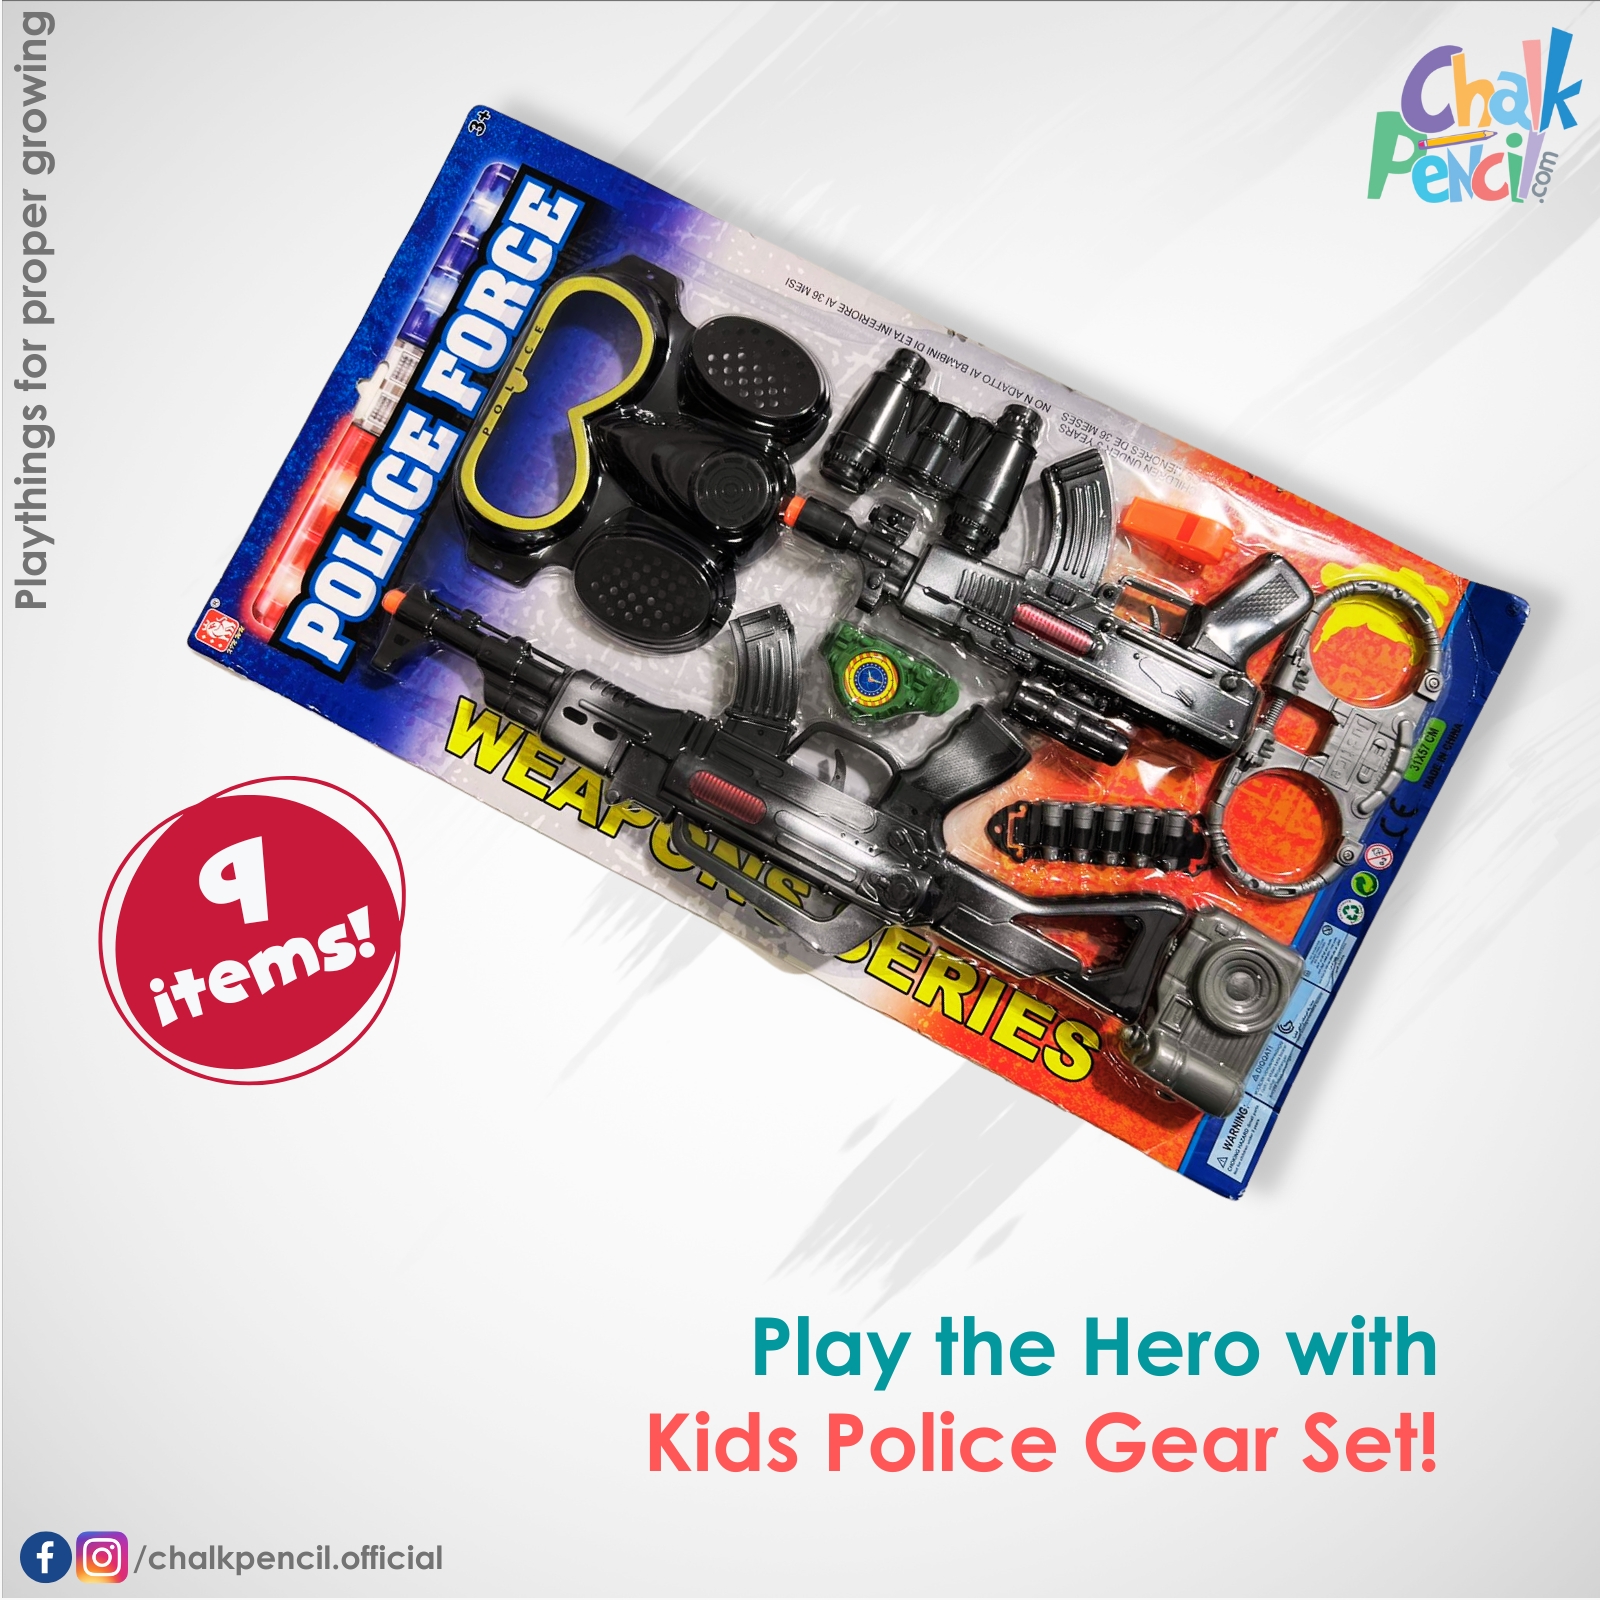 Kids Police Gear Set